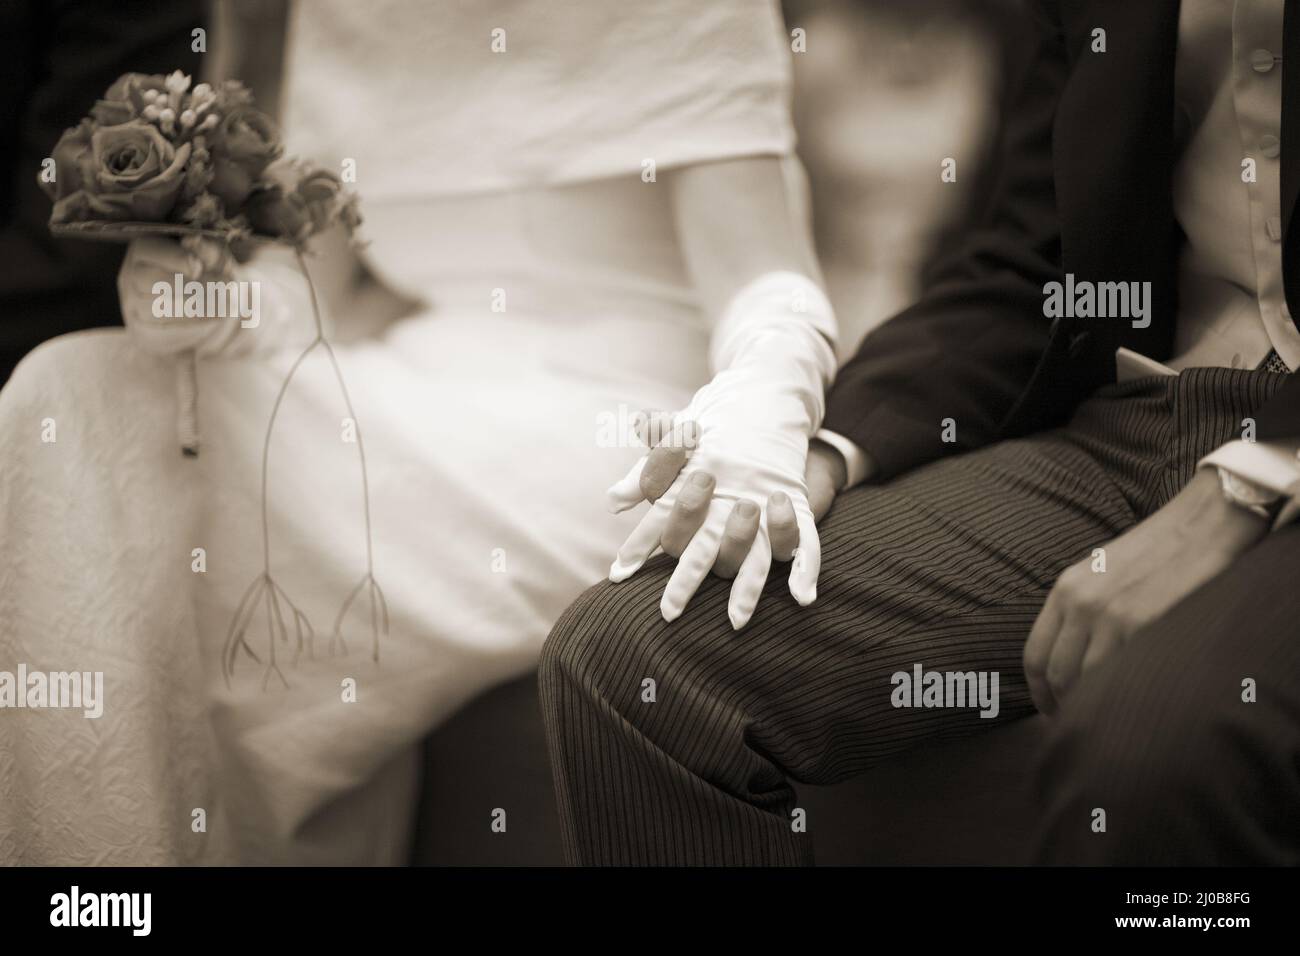 Hands of bride and bridegroom in wedding marriage ceremony Stock Photo